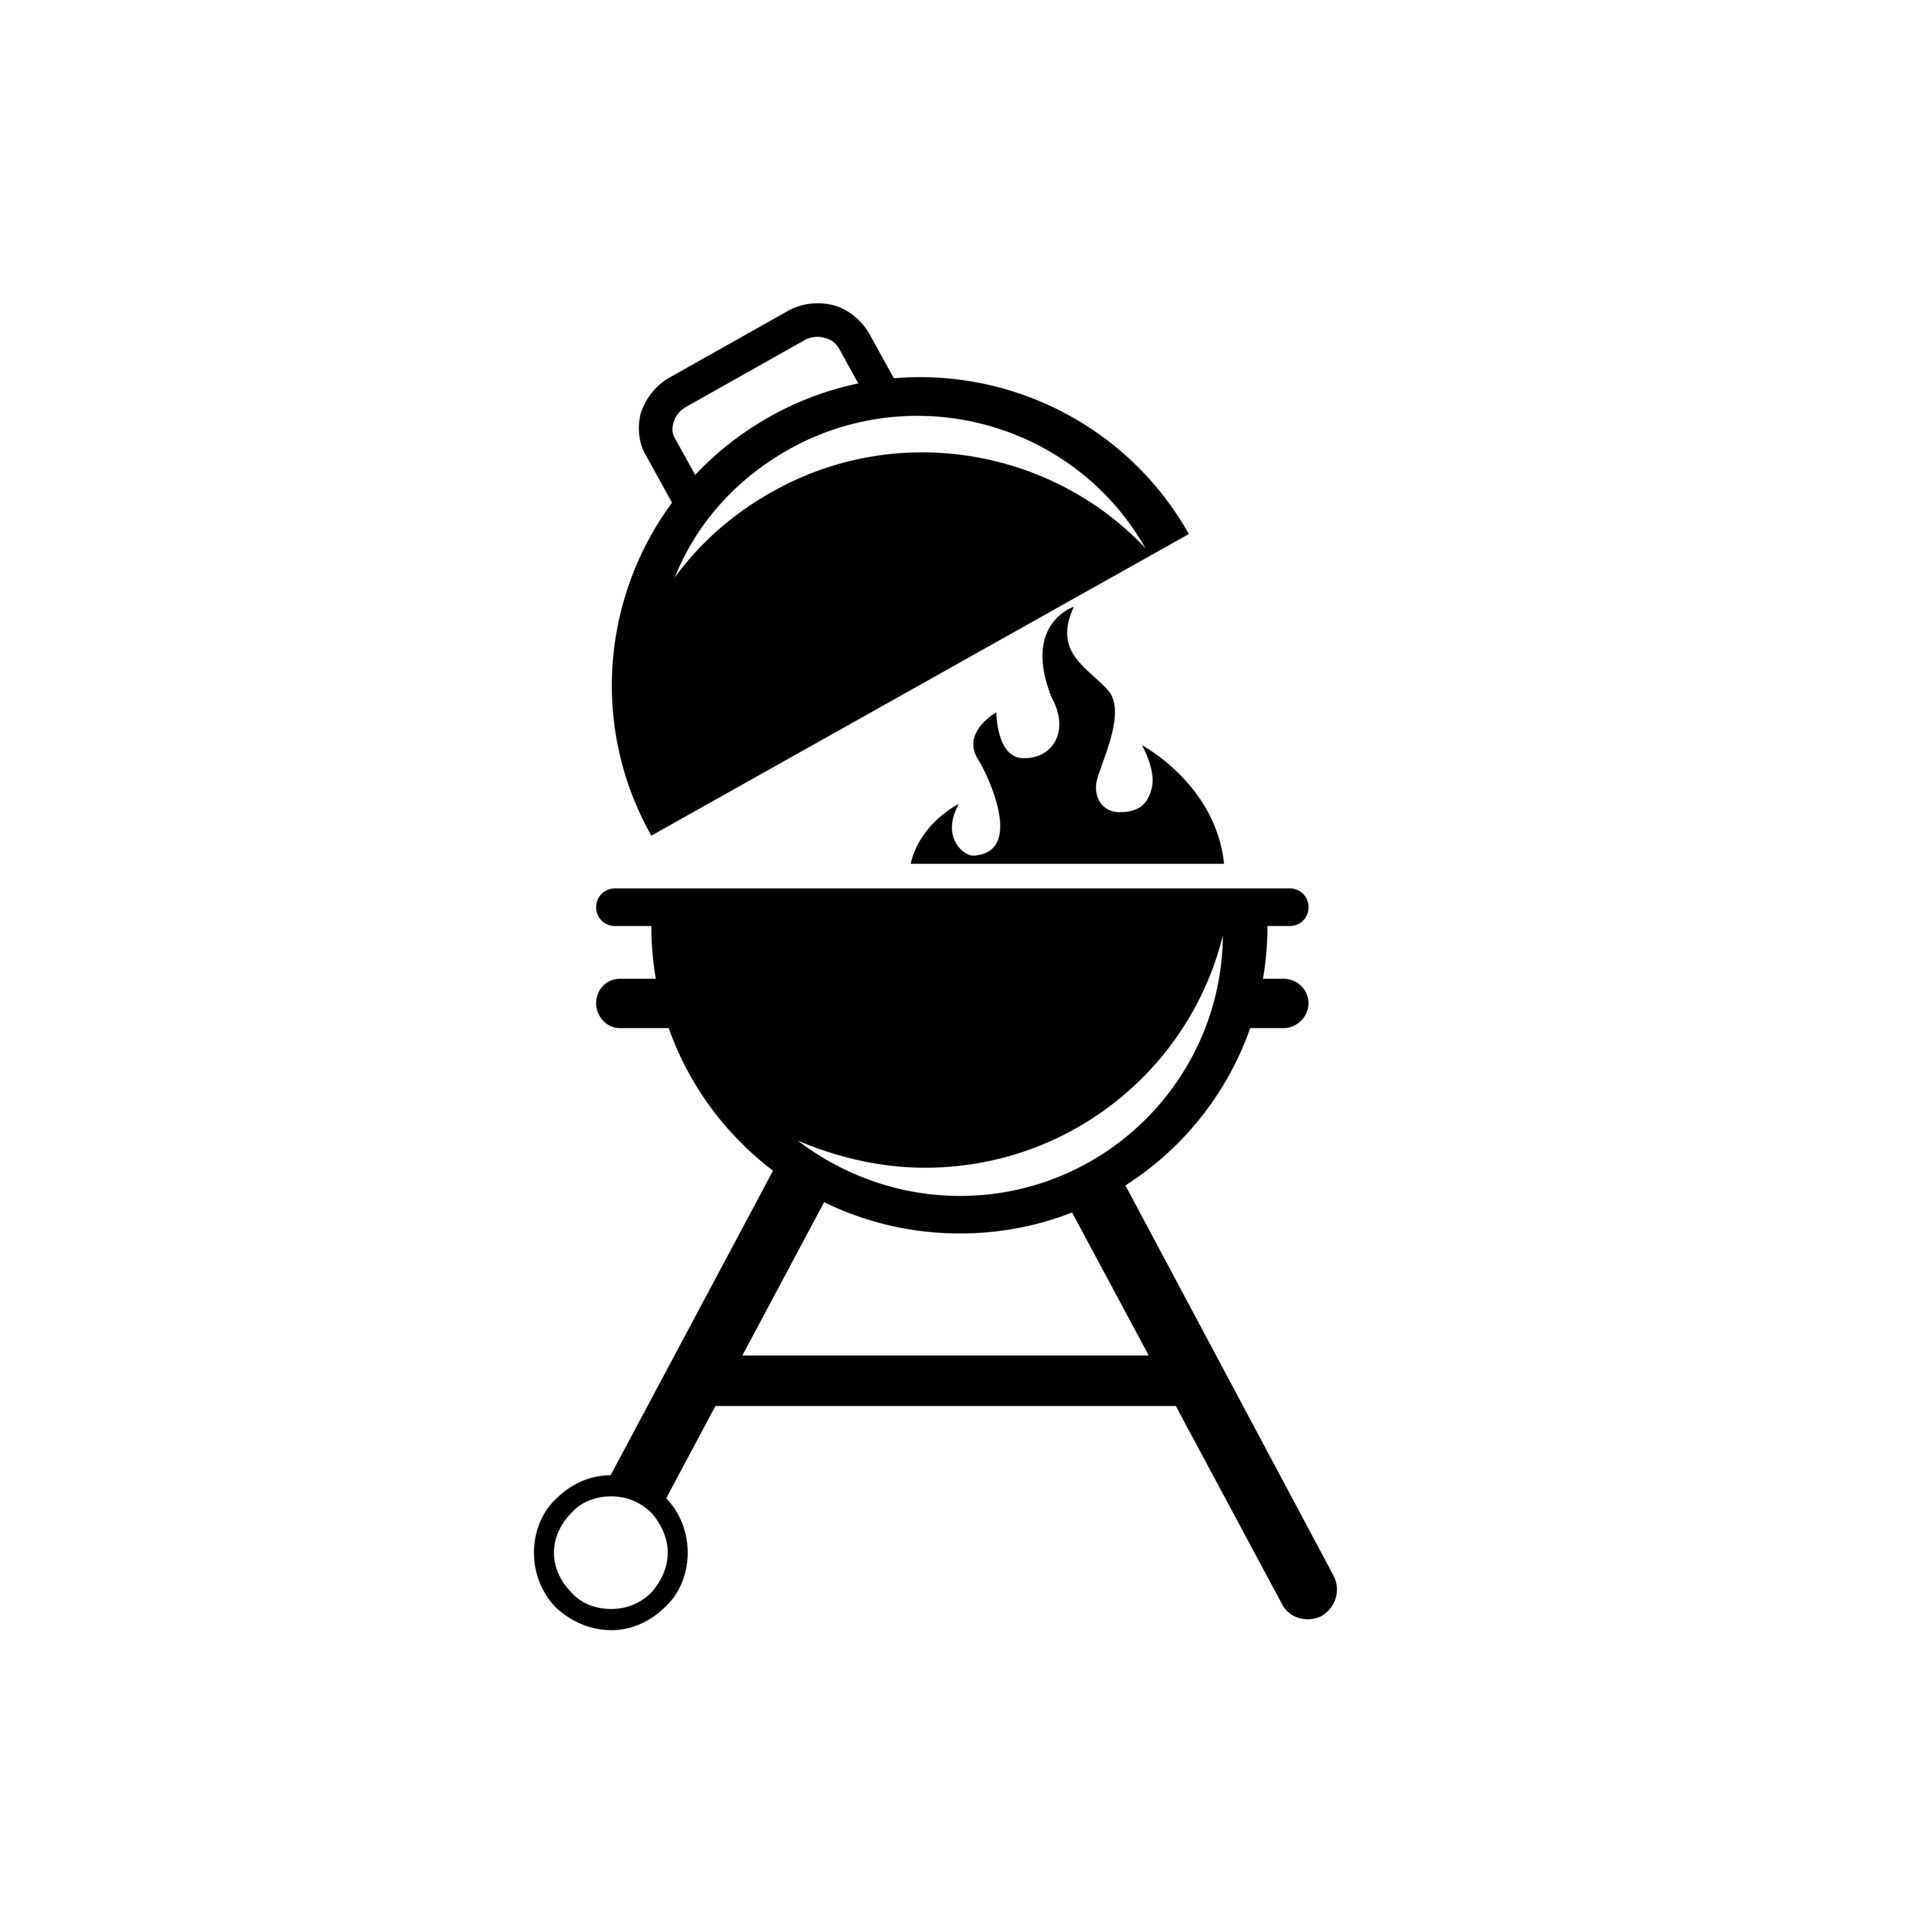 Icône Outils Barbecue Ou Le Gril Fourchette Barbecue Avec Une